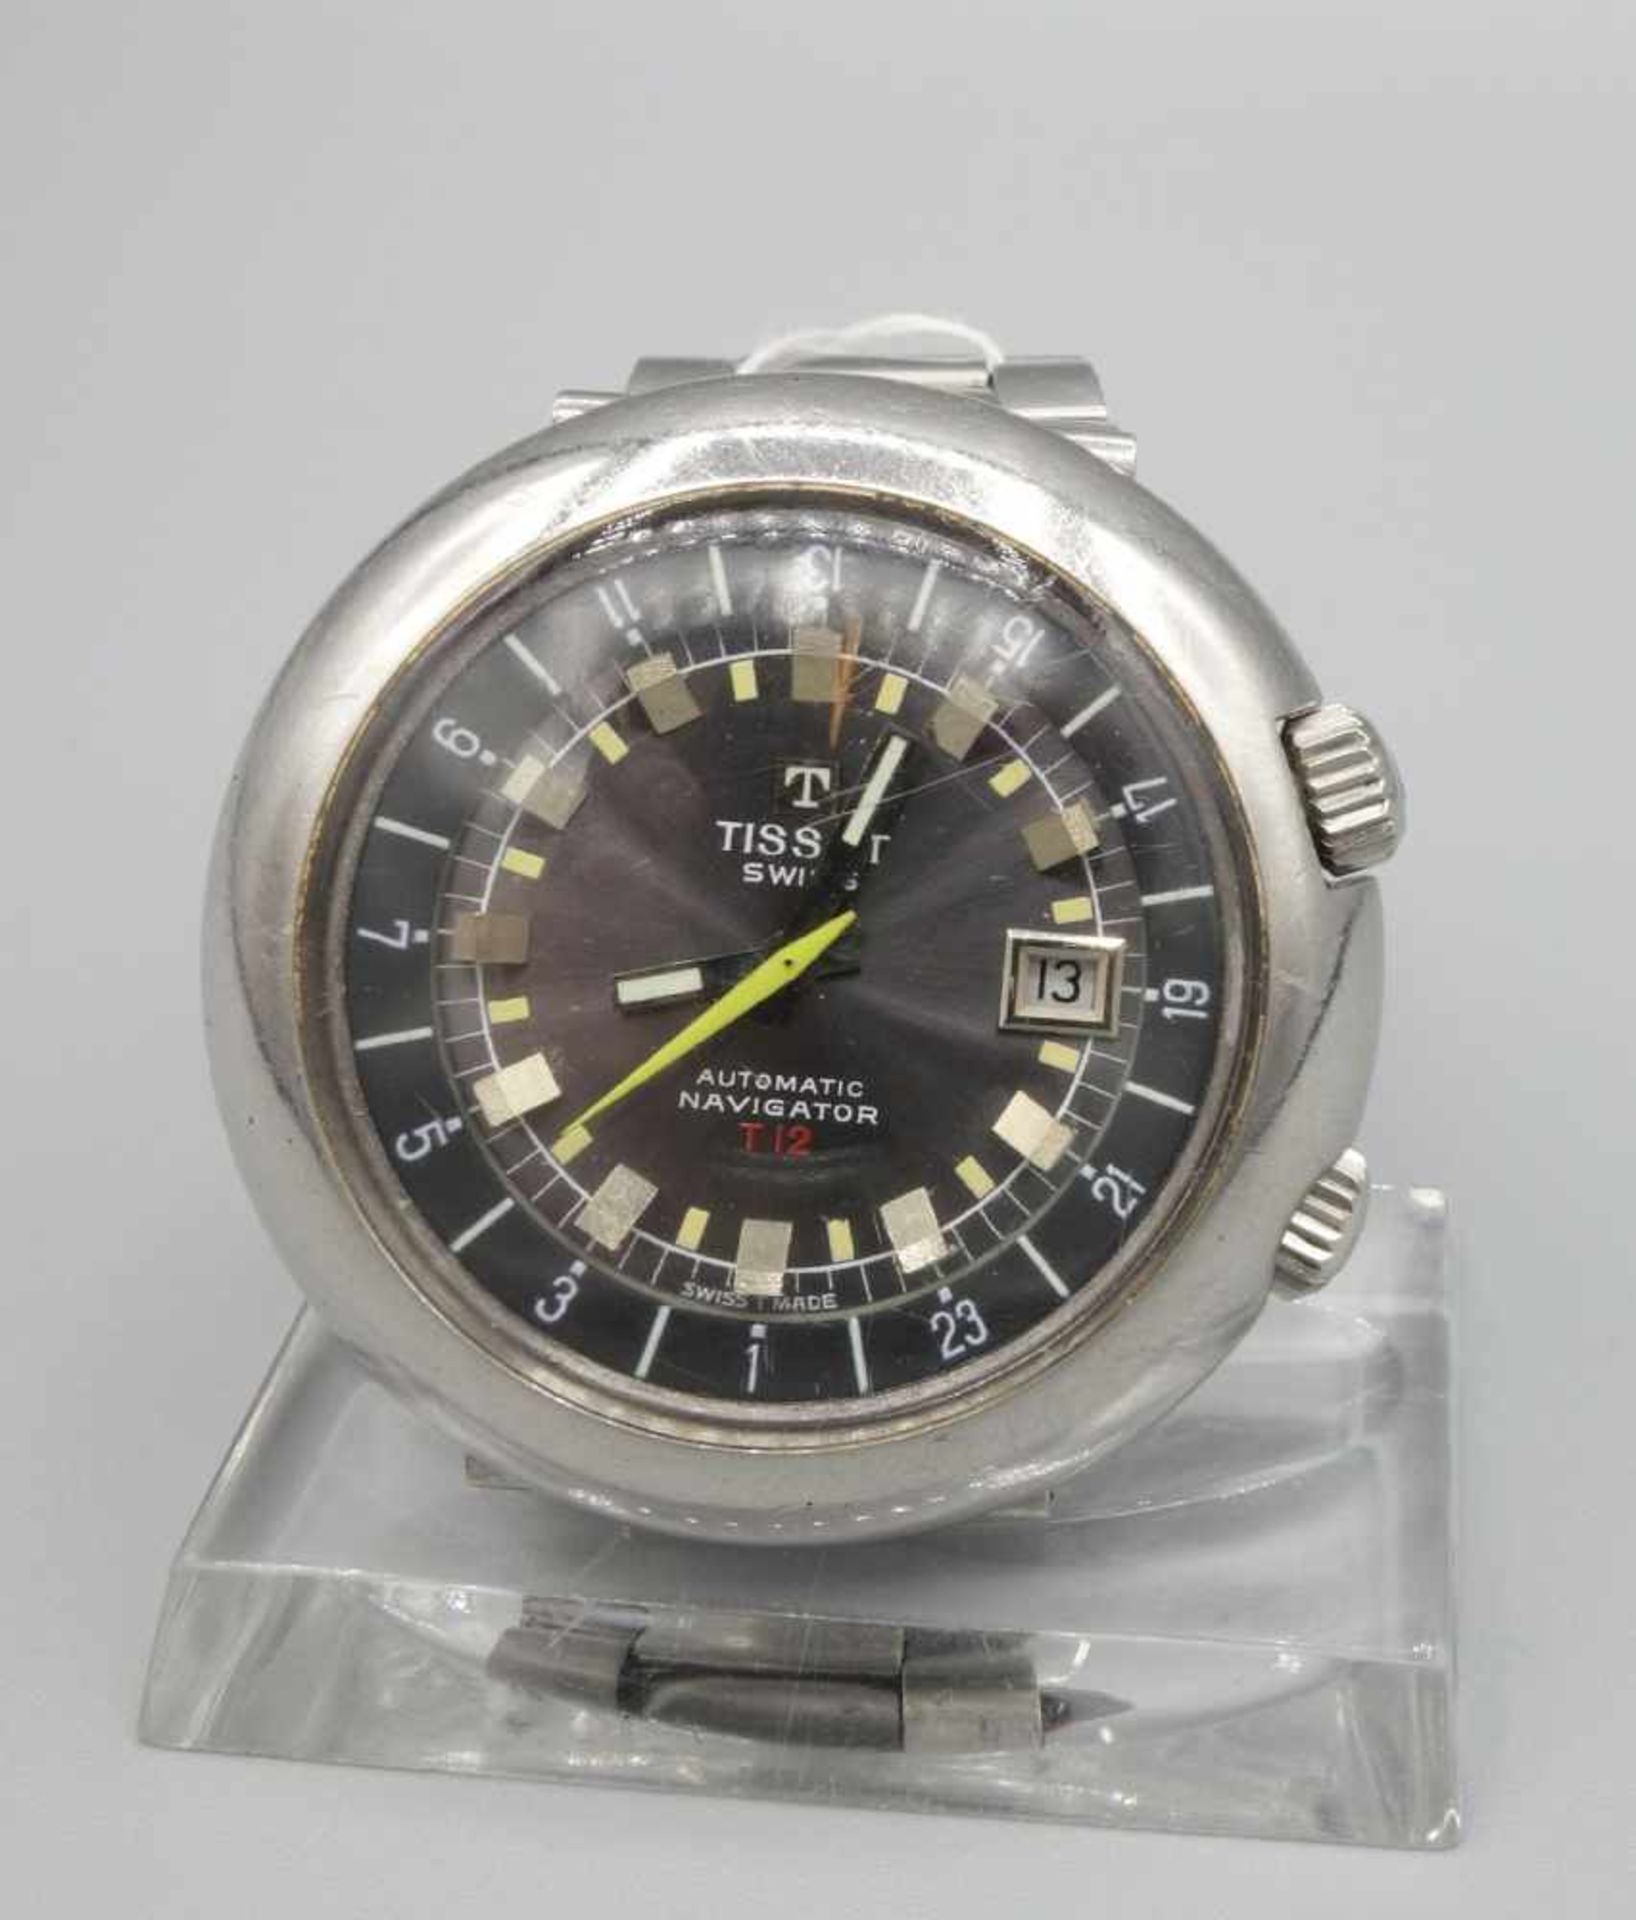 VINTAGE ARMBANDUHR: TISSOT NAVIGATOR T12 / wristwatch, 1970er Jahre, Manufaktur Tissot / Schweiz,